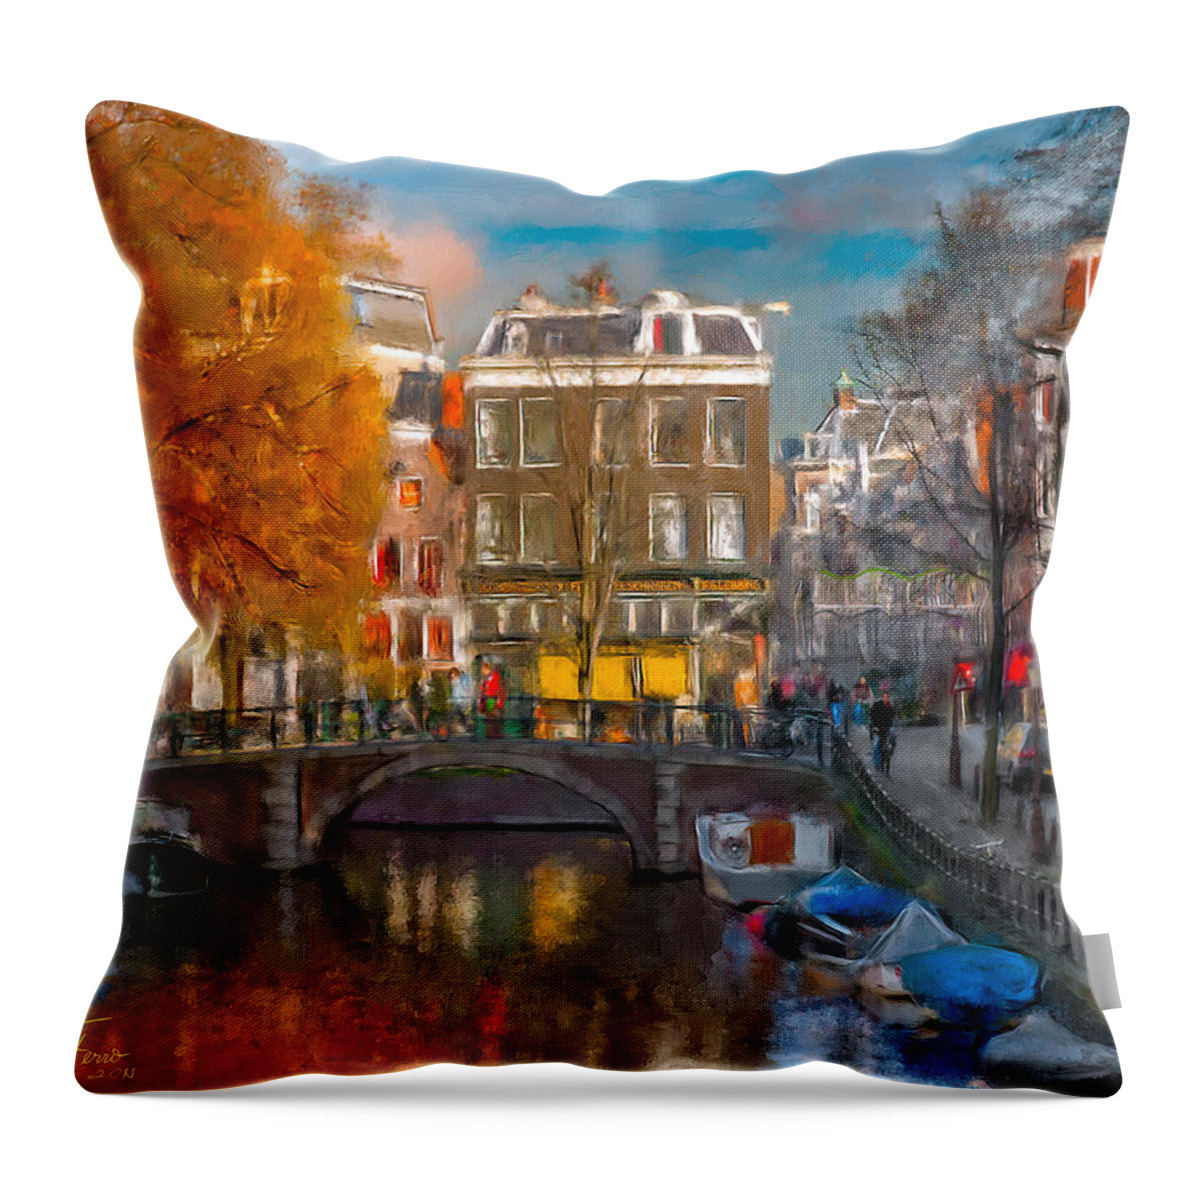 Holland Amsterdam Throw Pillow featuring the photograph Prinsengracht 807. Amsterdam #1 by Juan Carlos Ferro Duque